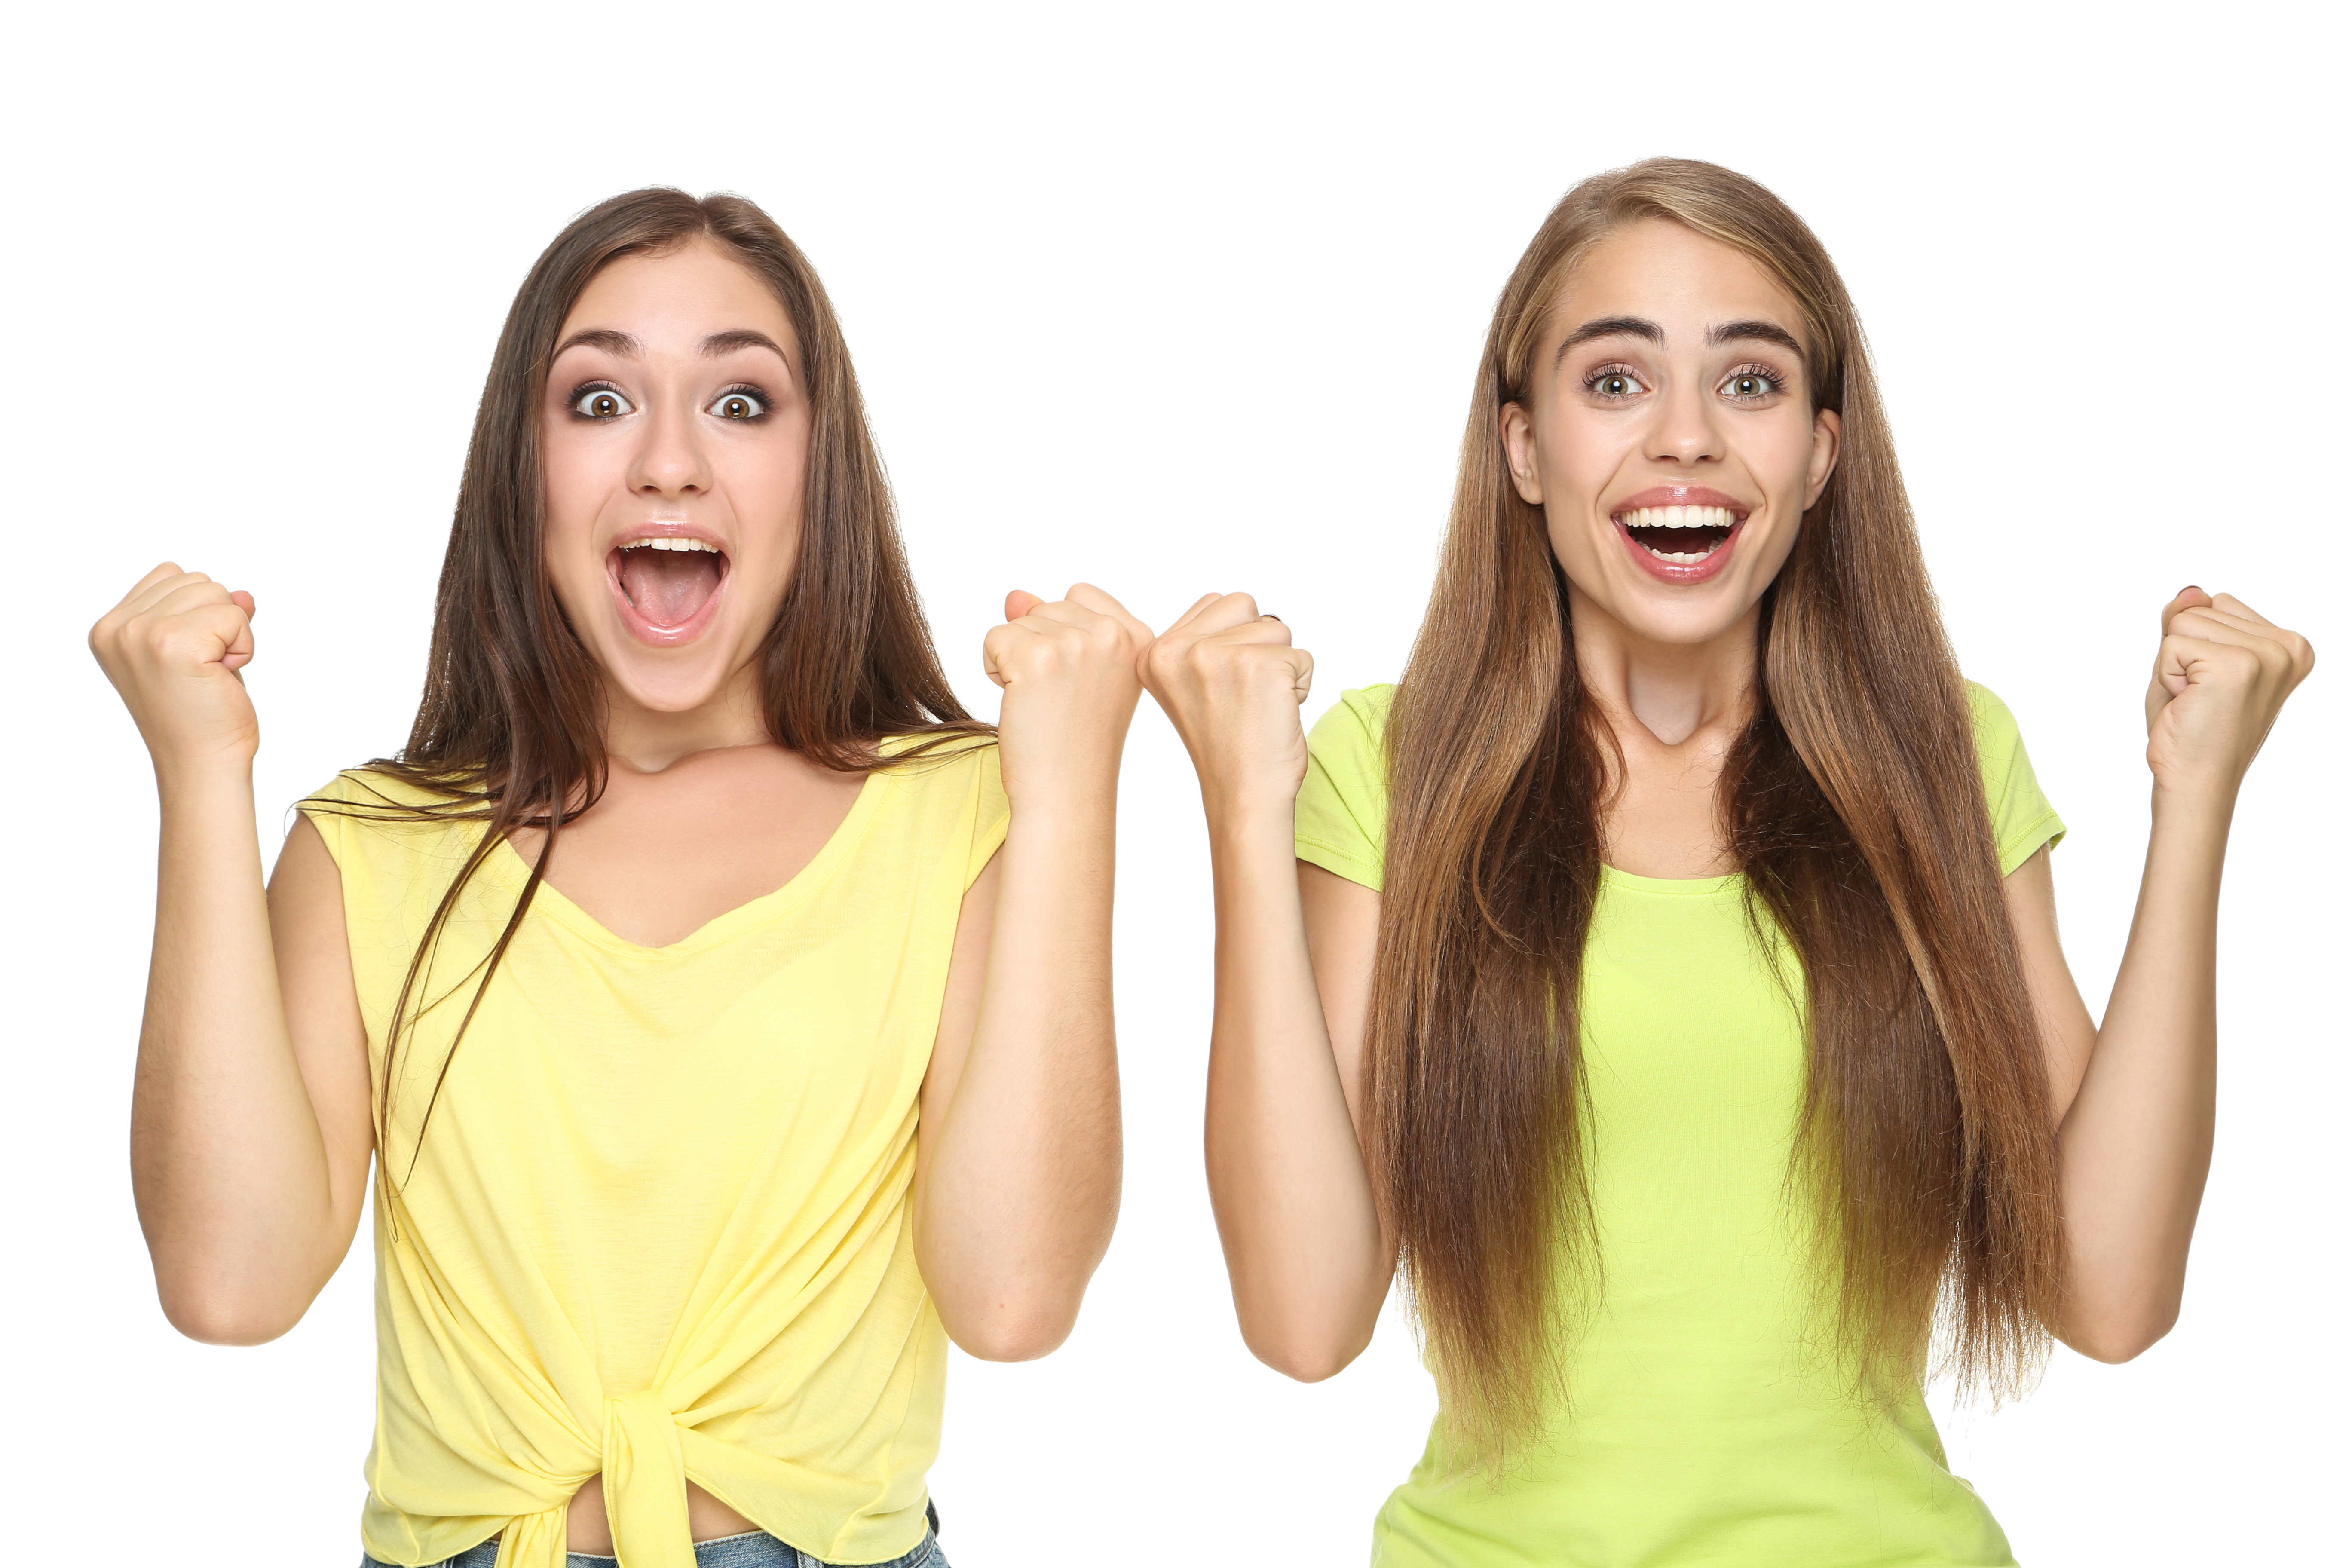 Two girls looking ecstatic | Source: Shutterstock